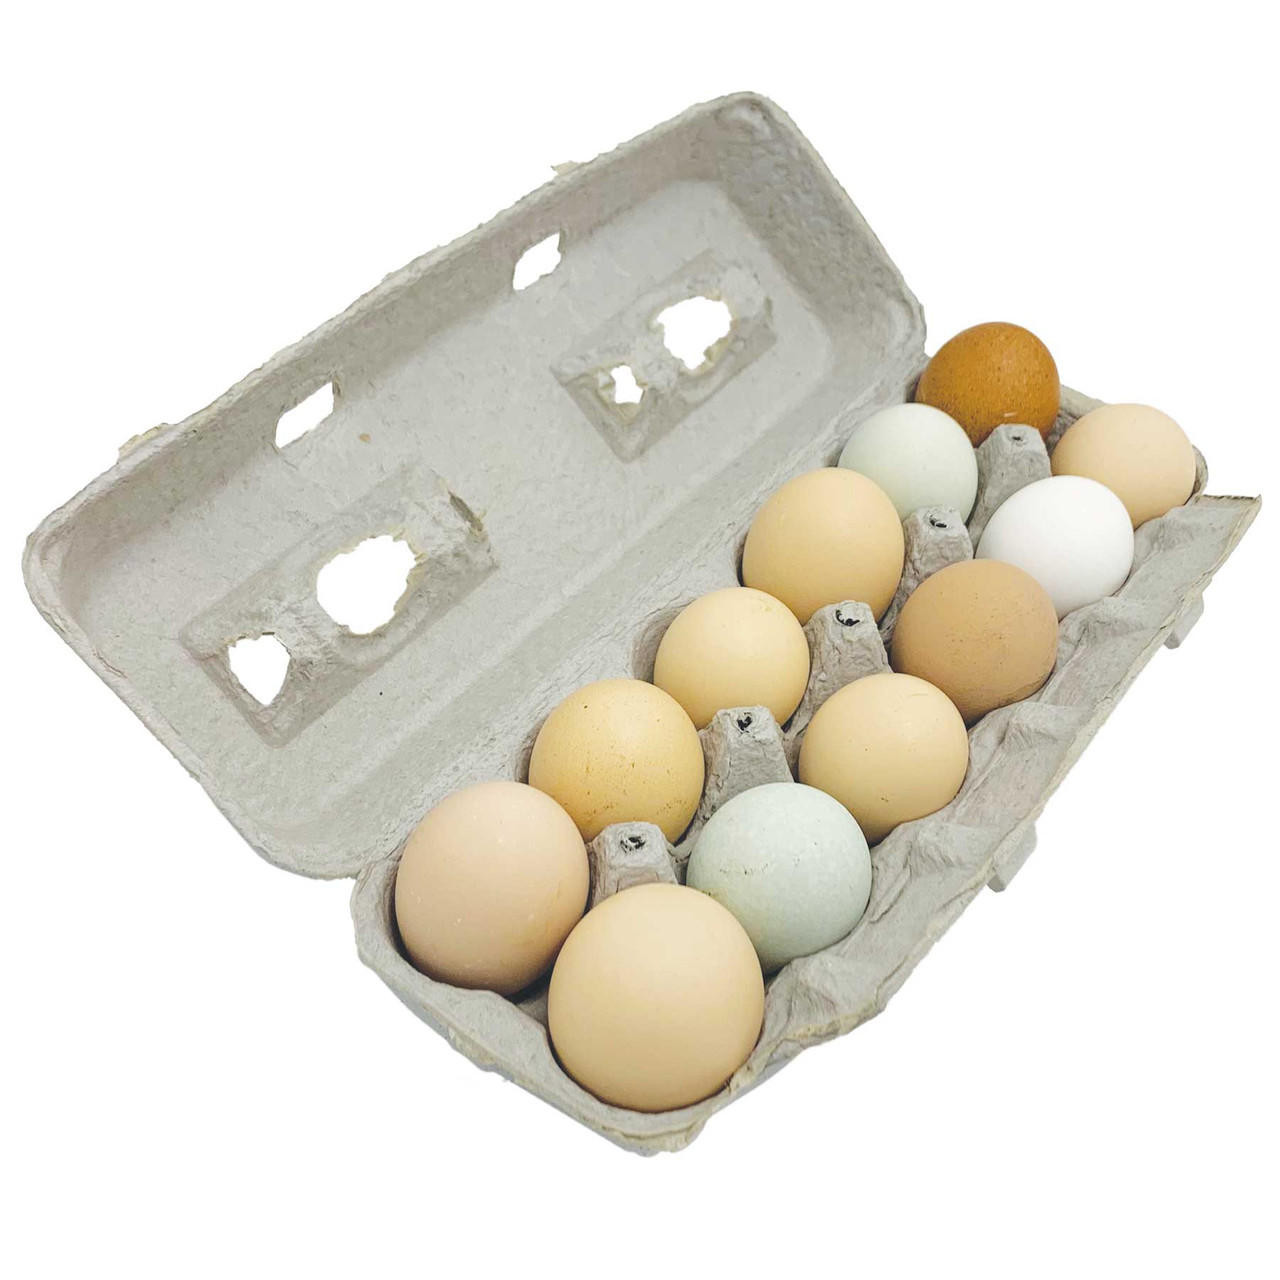 12 ct Jumbo Blank View Post Pulp Egg Cartons w/ FREE SHIPPING*